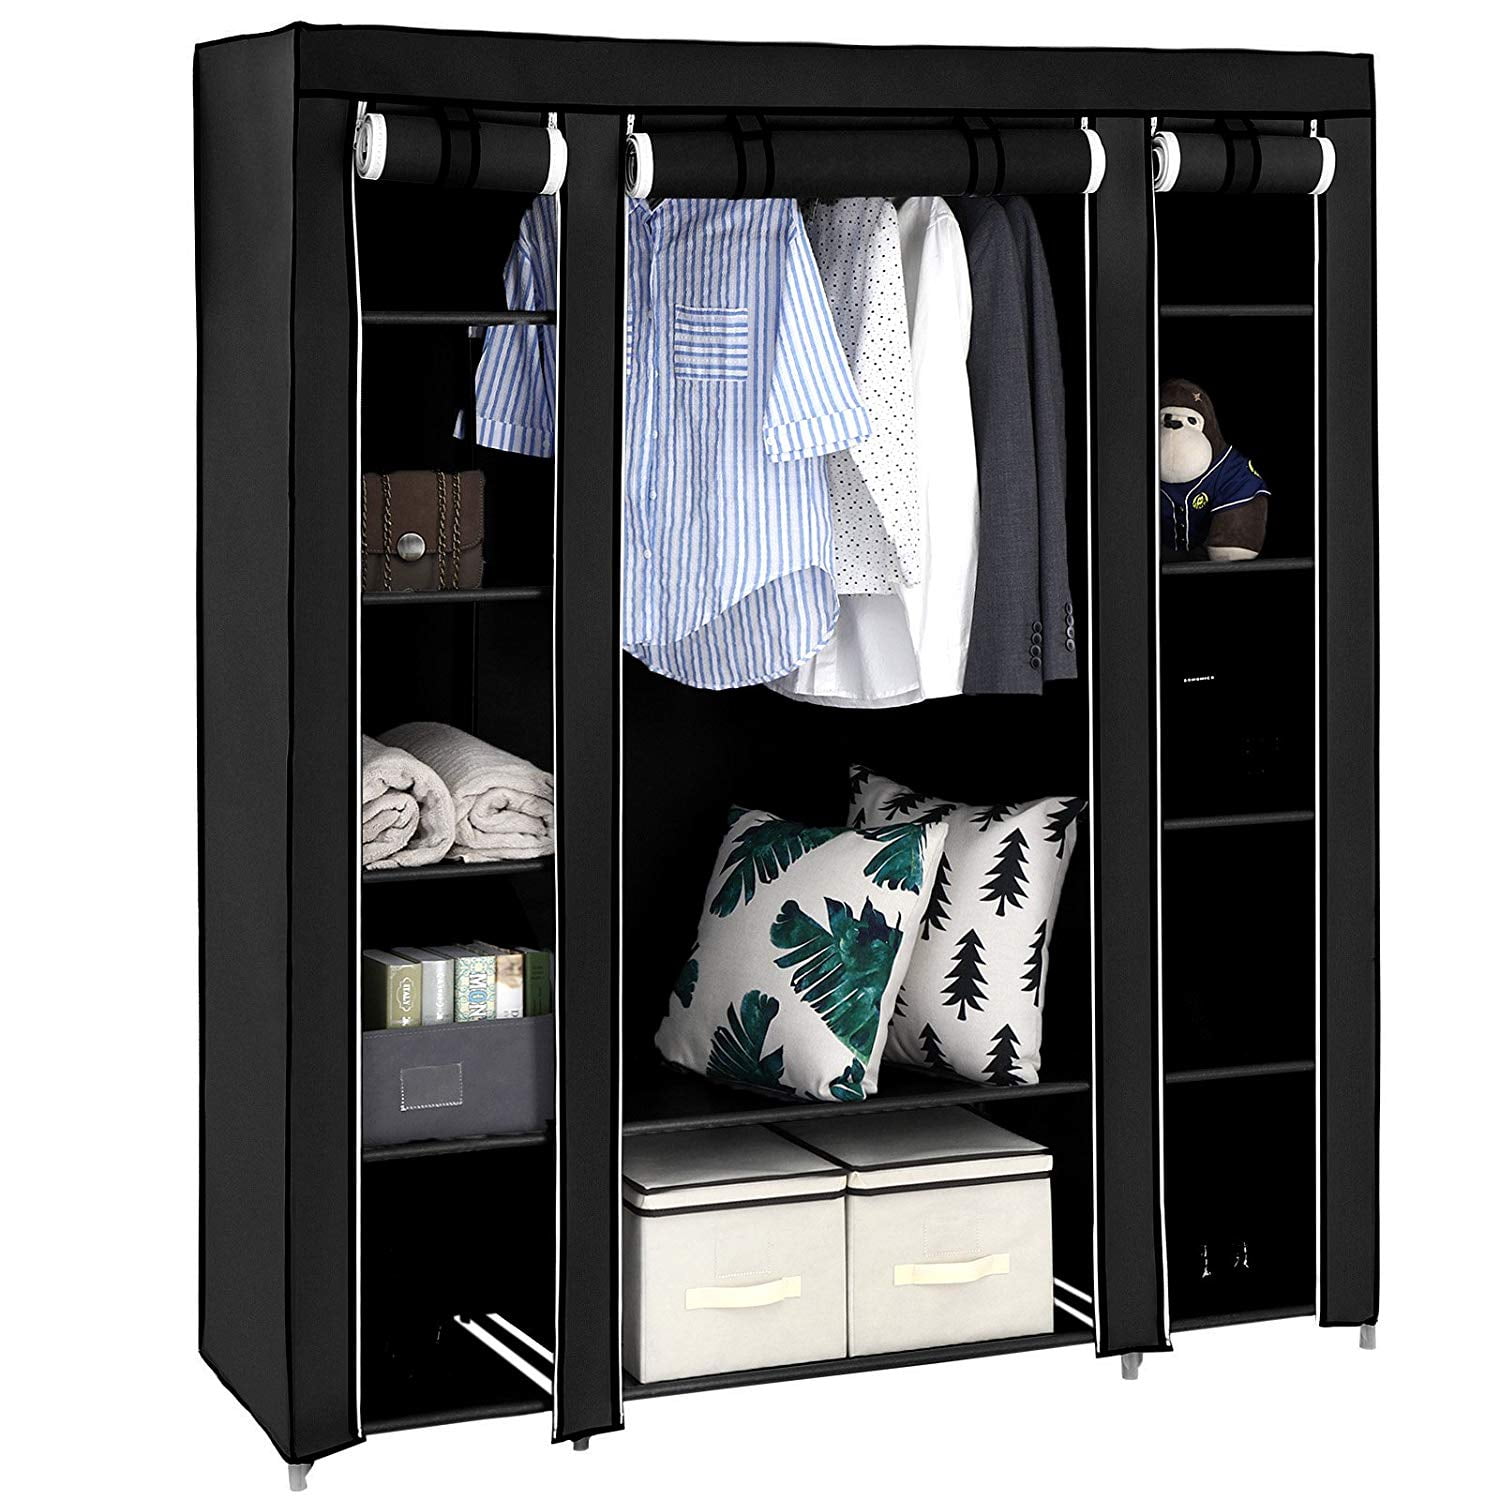 53" Gray Portable Closet Storage Organizer Clothes Wardrobe Rack with Shelves 